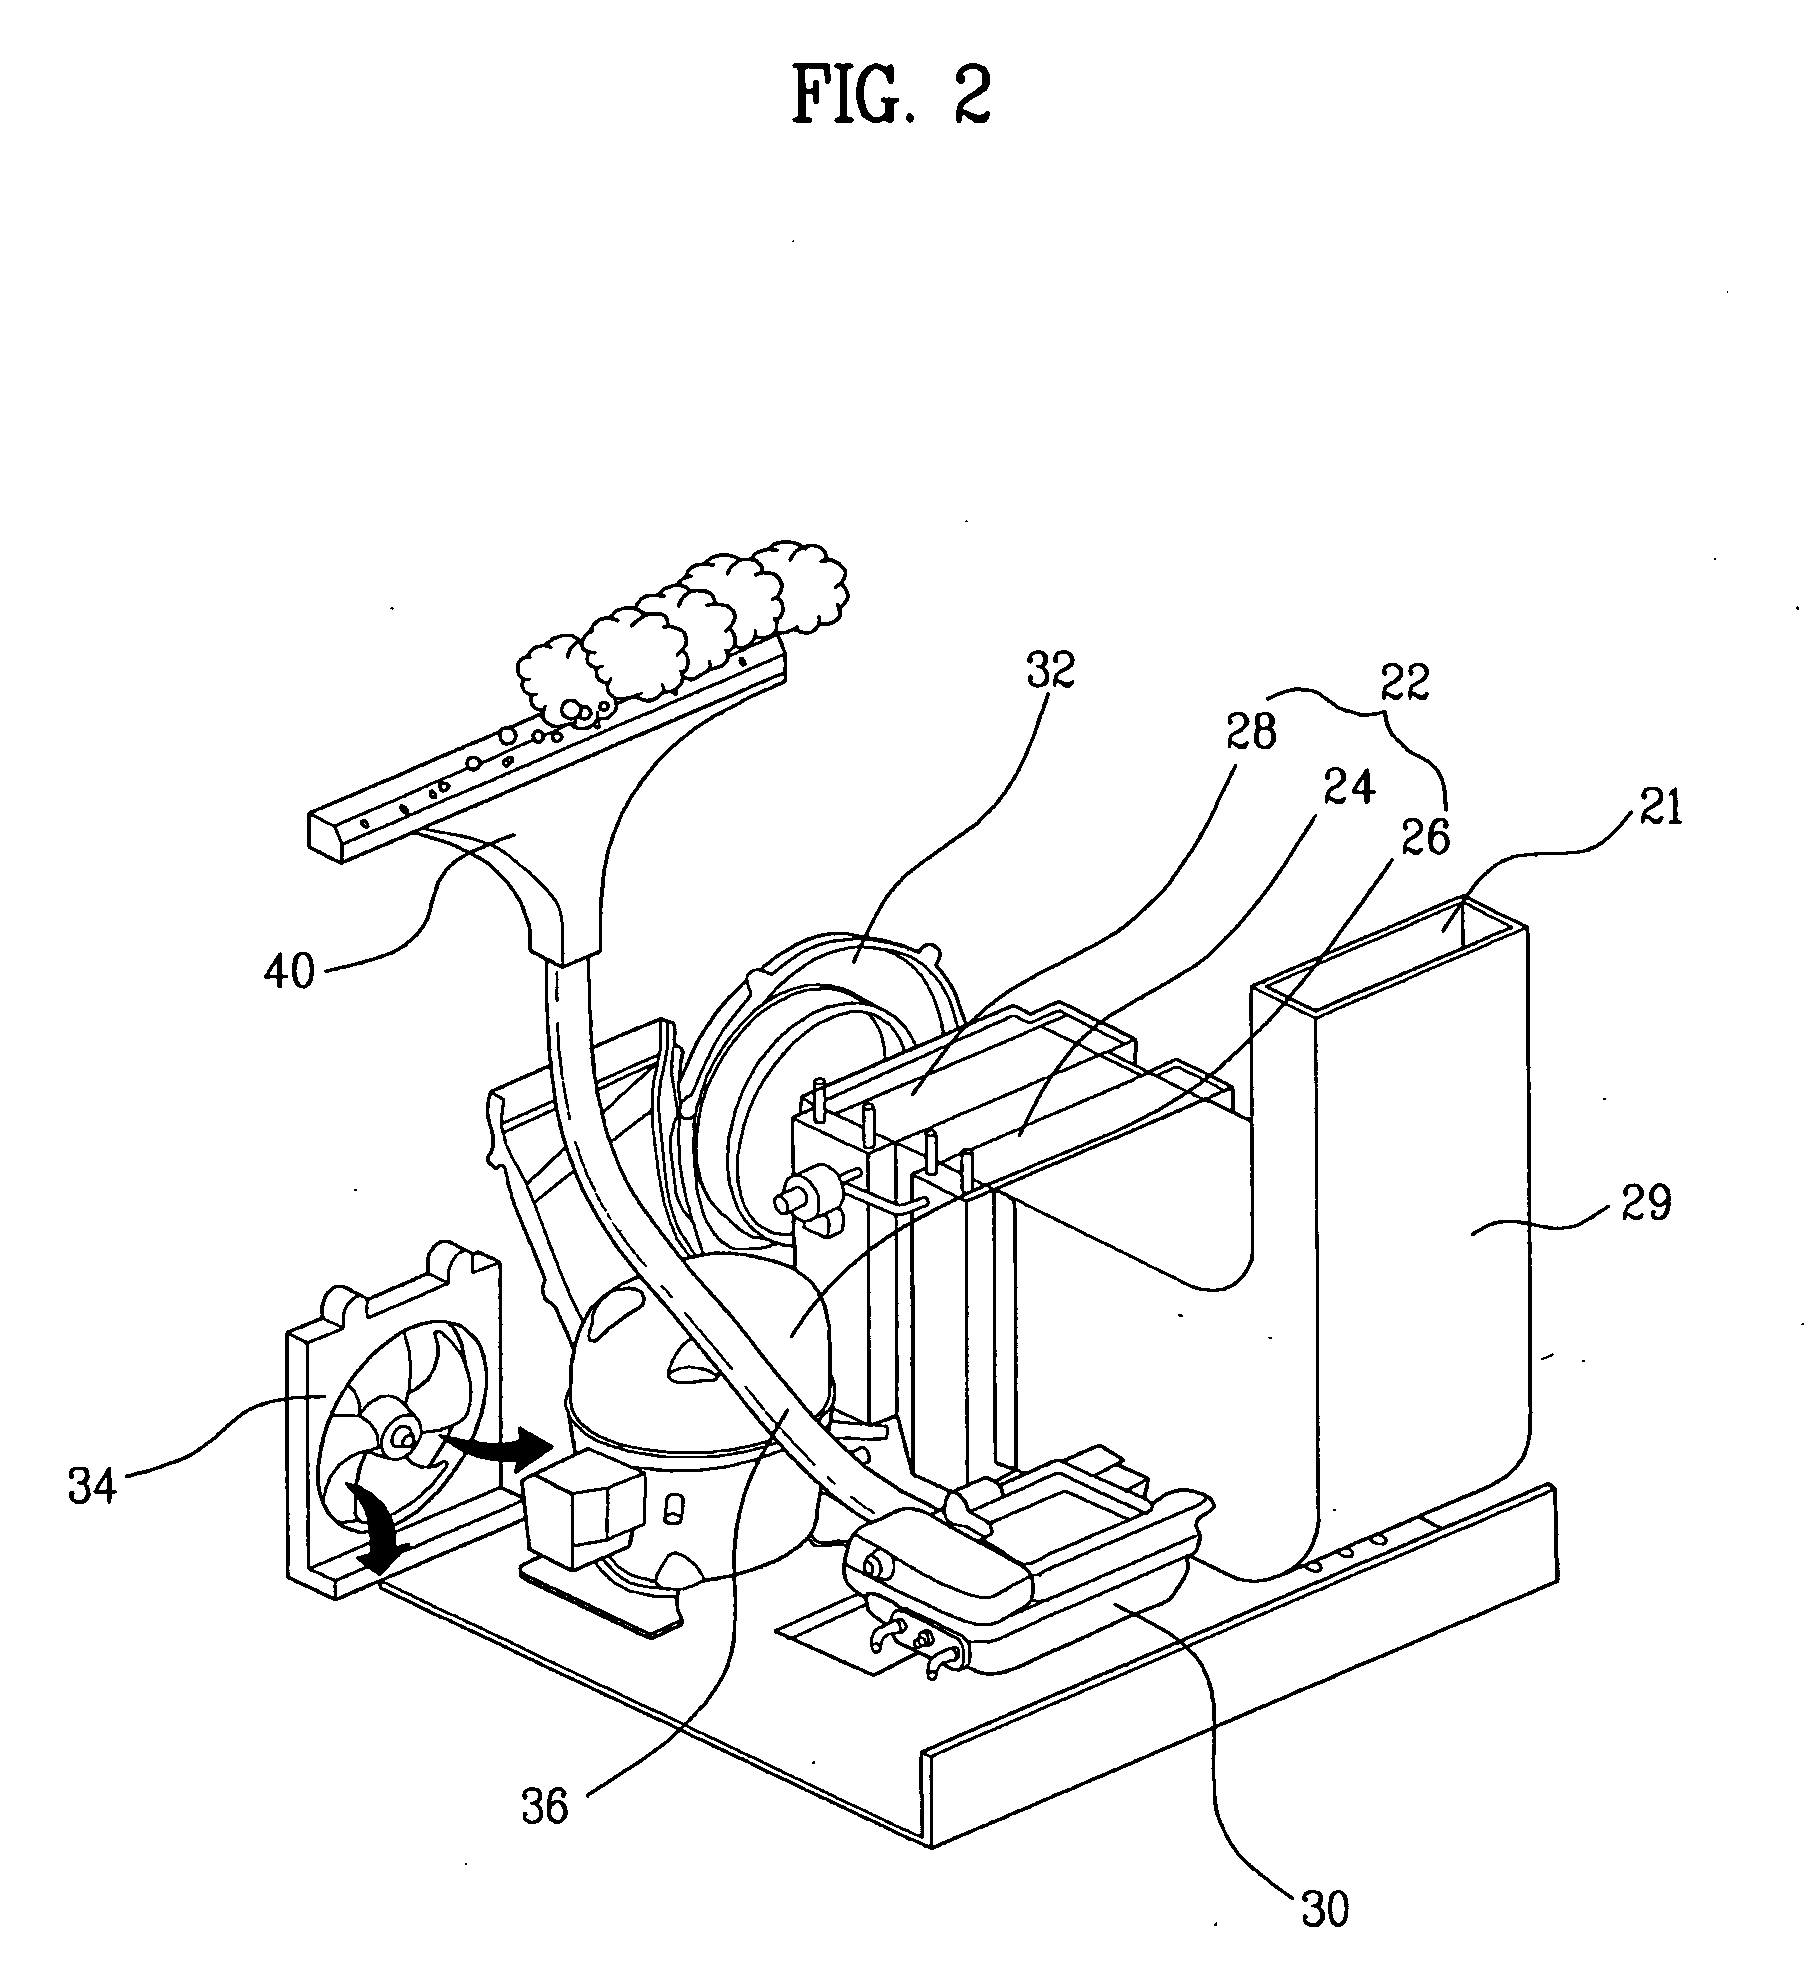 Clothes treating apparatus